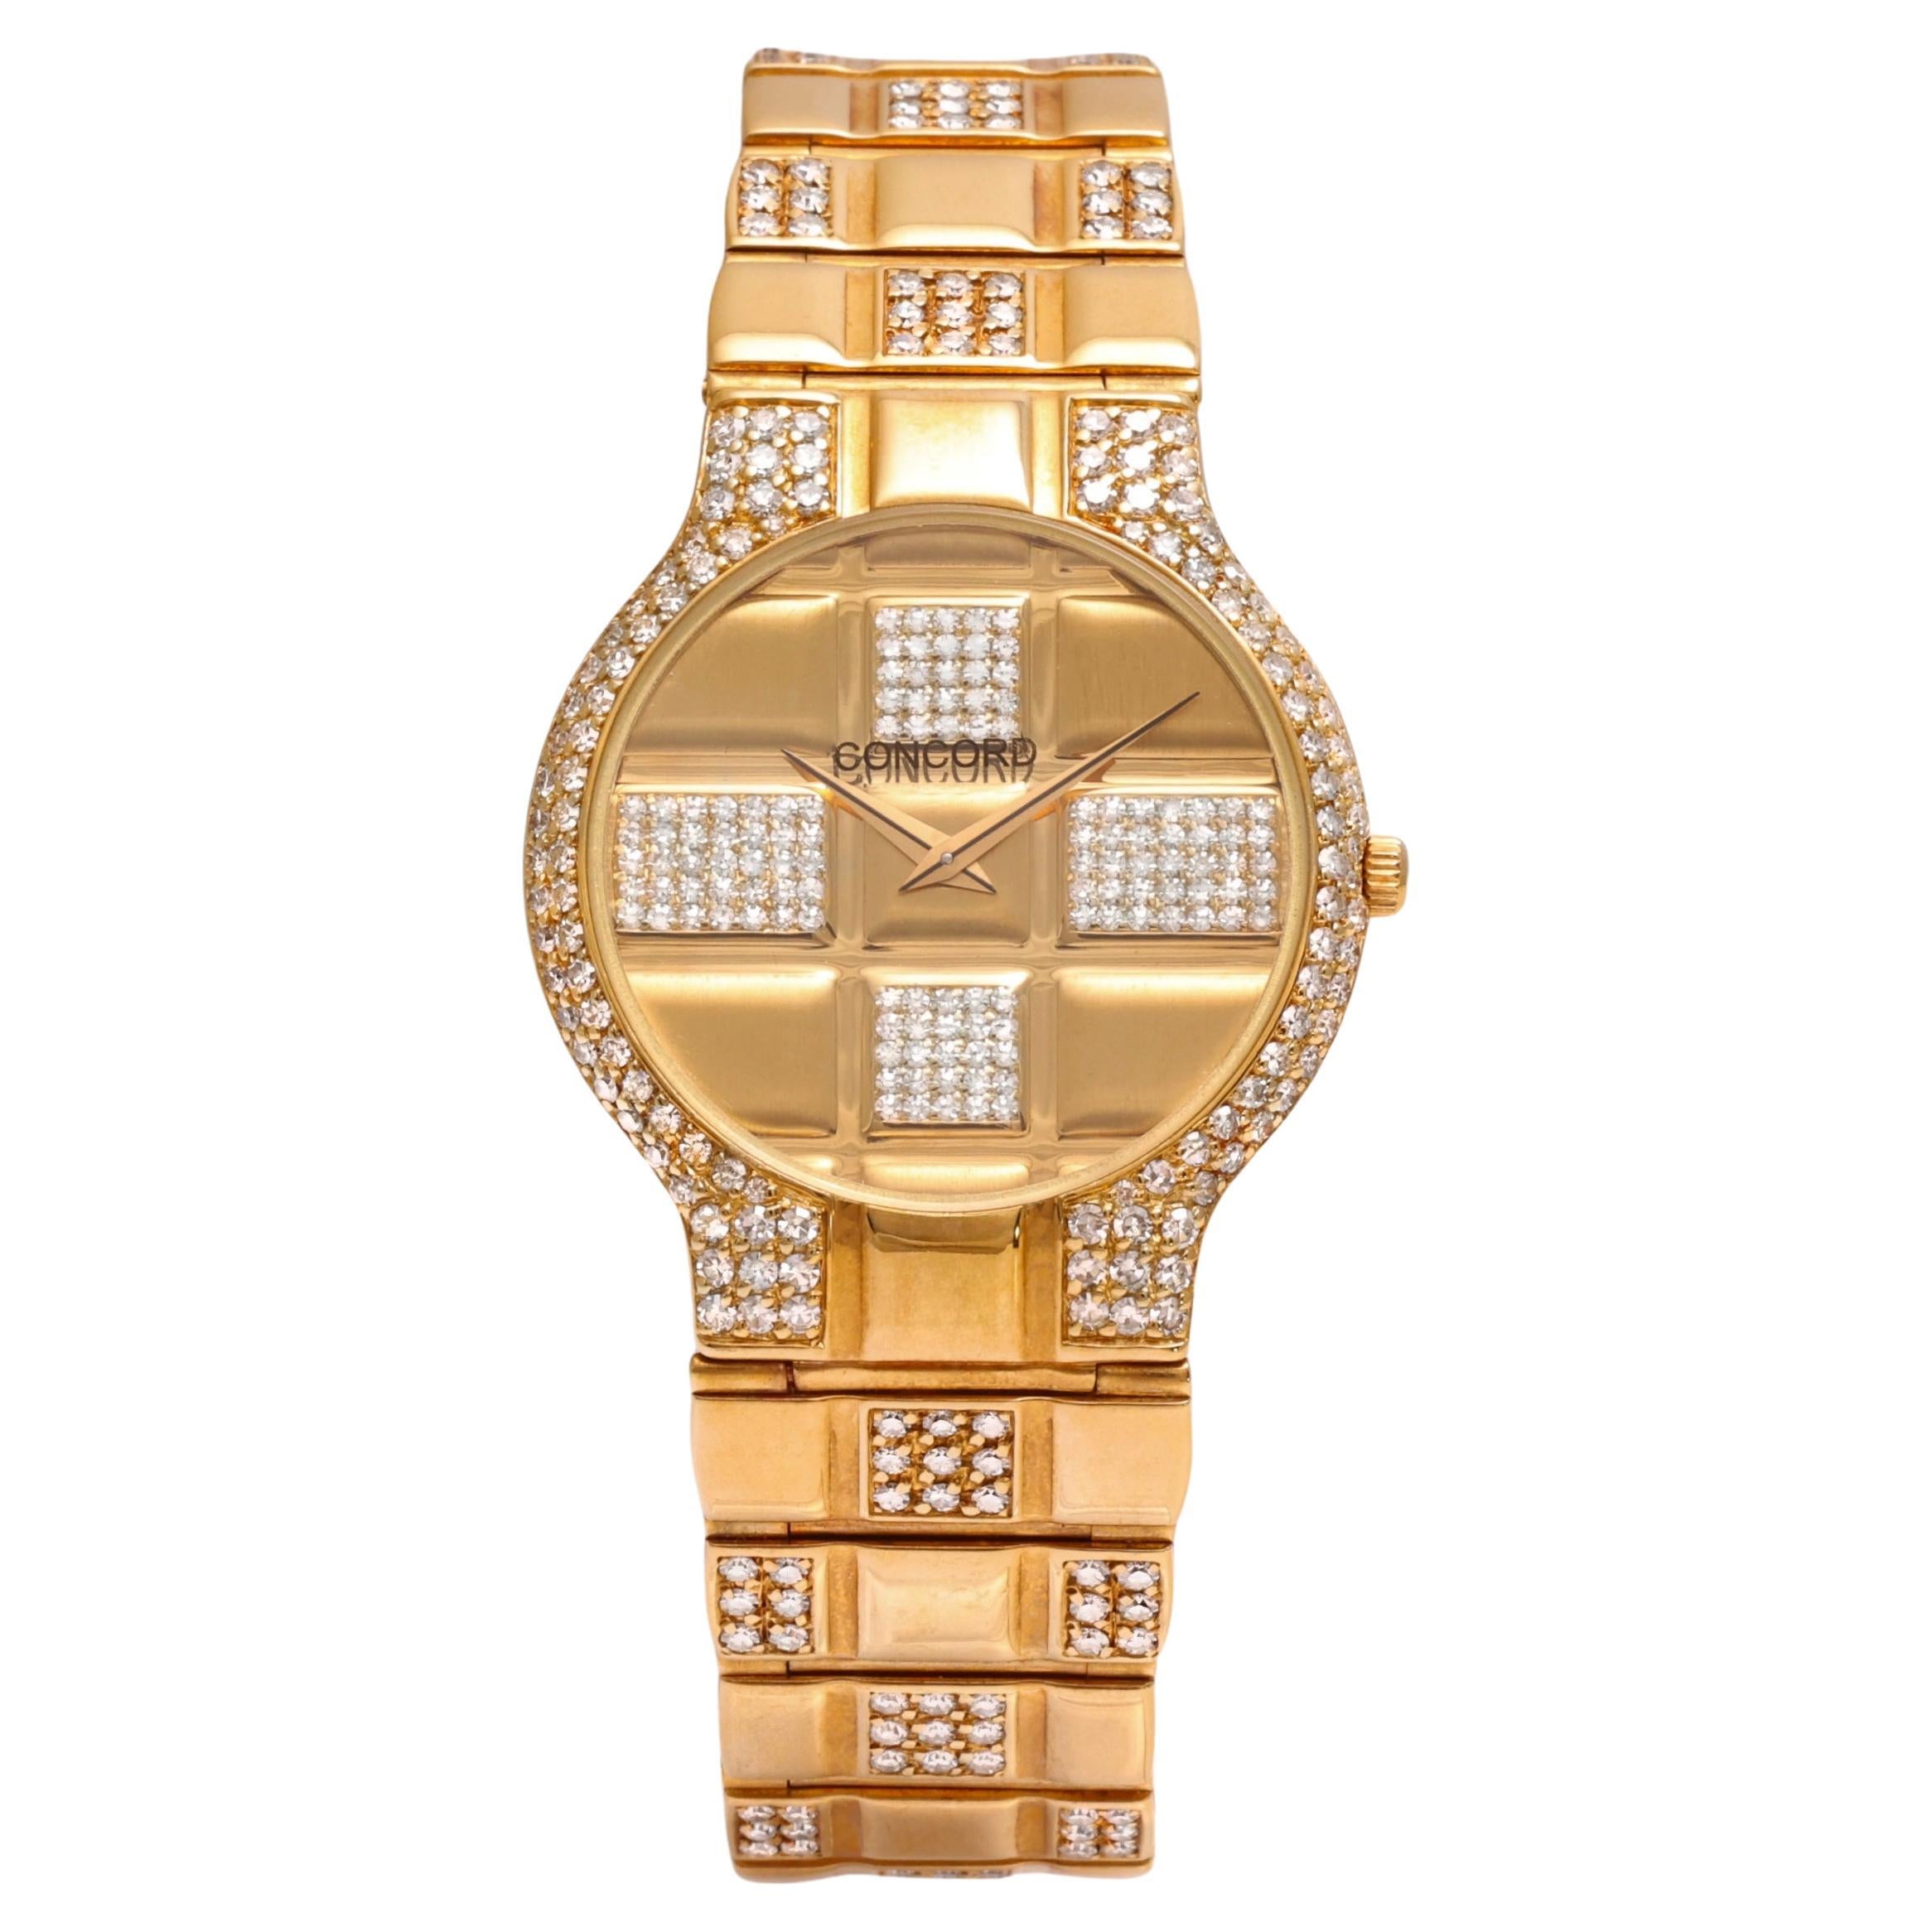 18 Kt Solid Full Gold & Diamonds Concord Wrist Watch Full Set